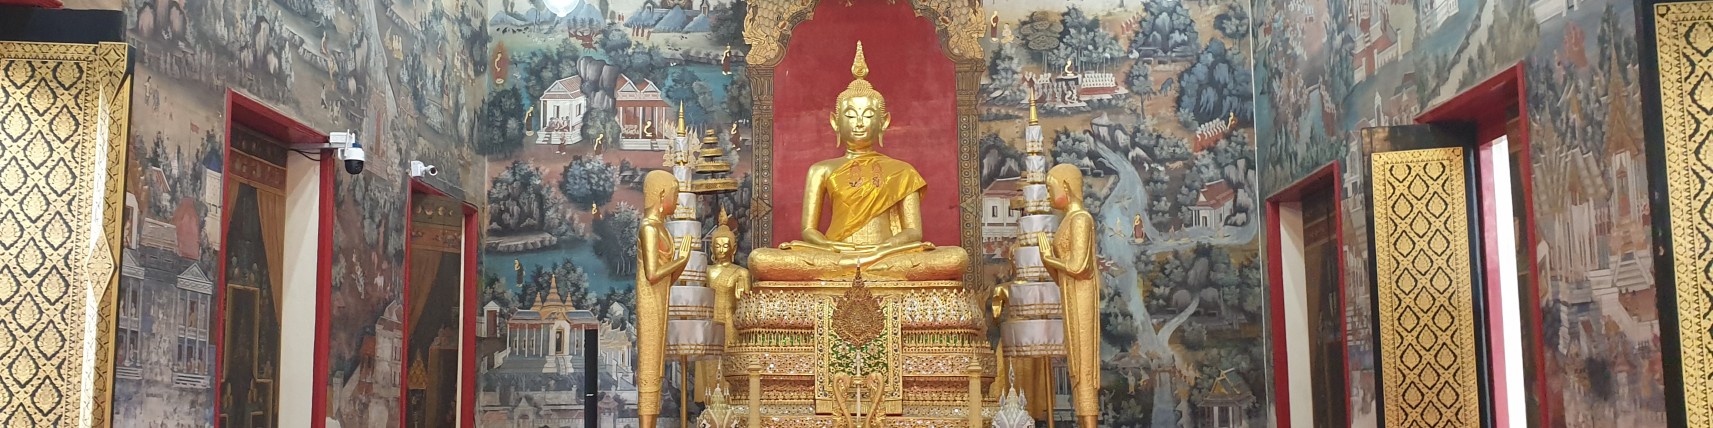 Wat Chaiyo Worawihan, Chaiyo District, Ang Thong Province